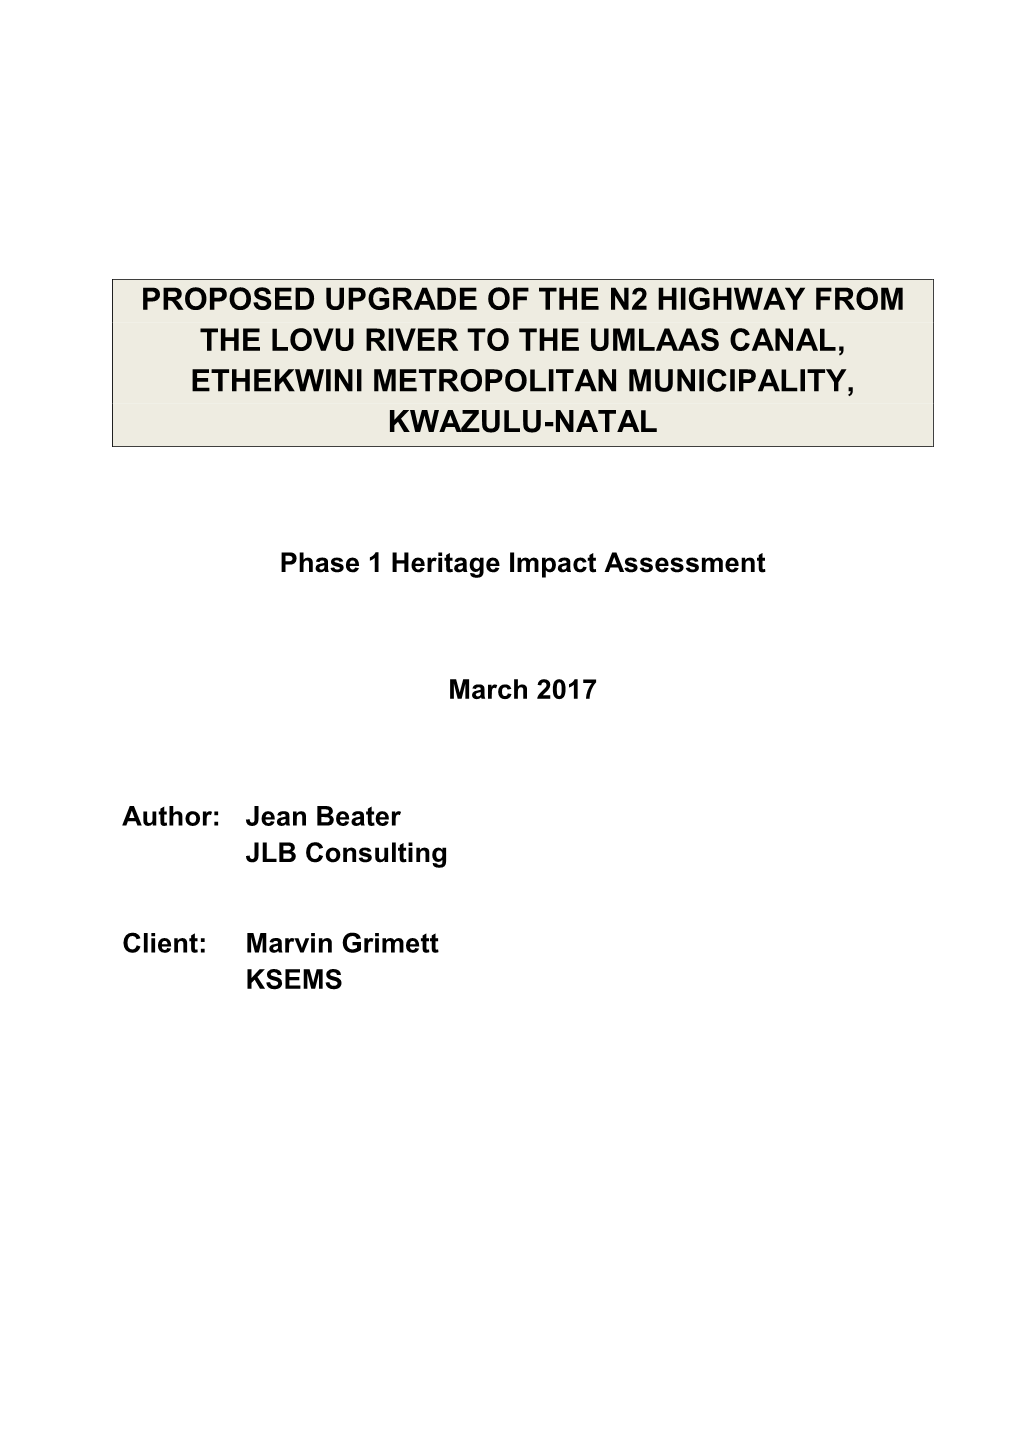 Proposed Upgrade of the N2 Highway from the Lovu River to the Umlaas Canal, Ethekwini Metropolitan Municipality, Kwazulu-Natal